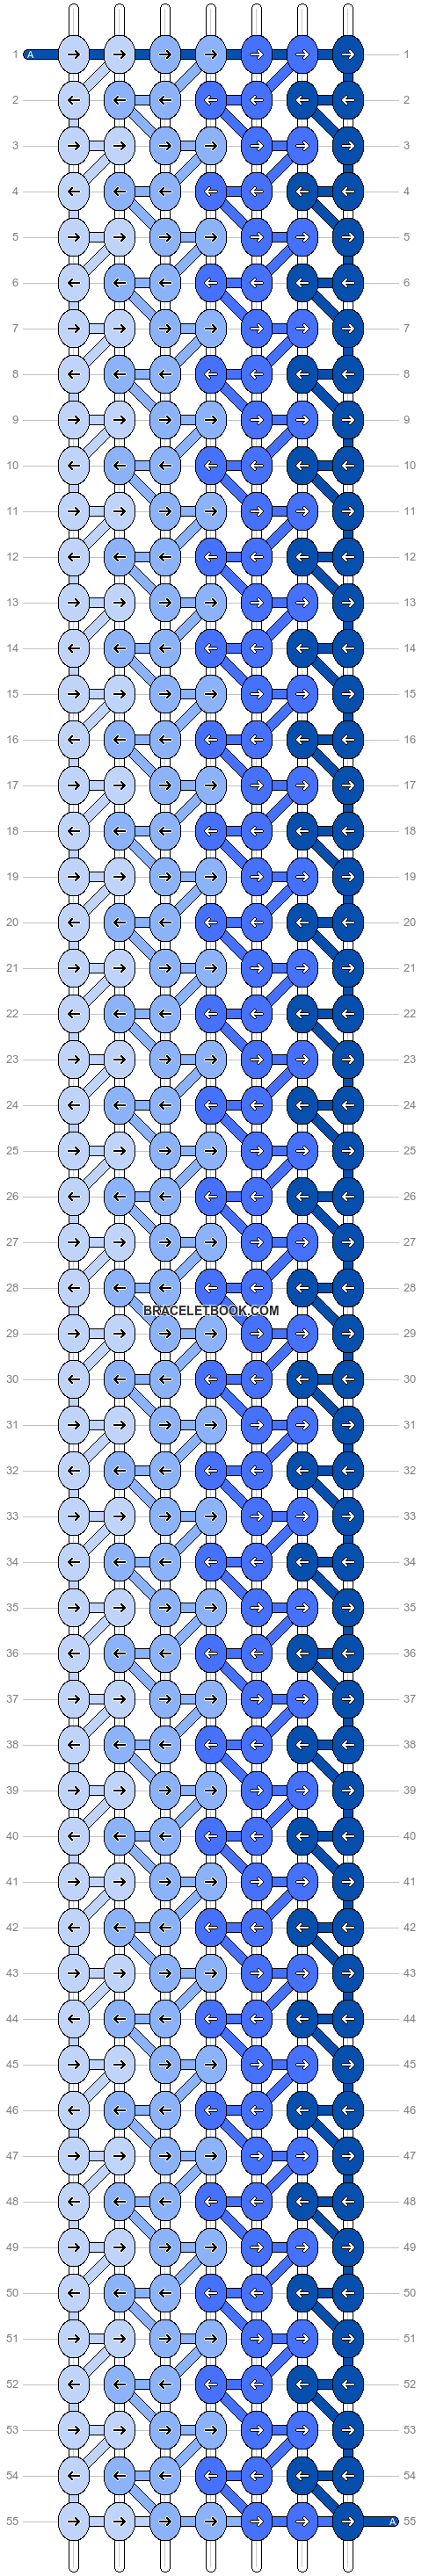 Alpha pattern #15230 variation #135888 pattern